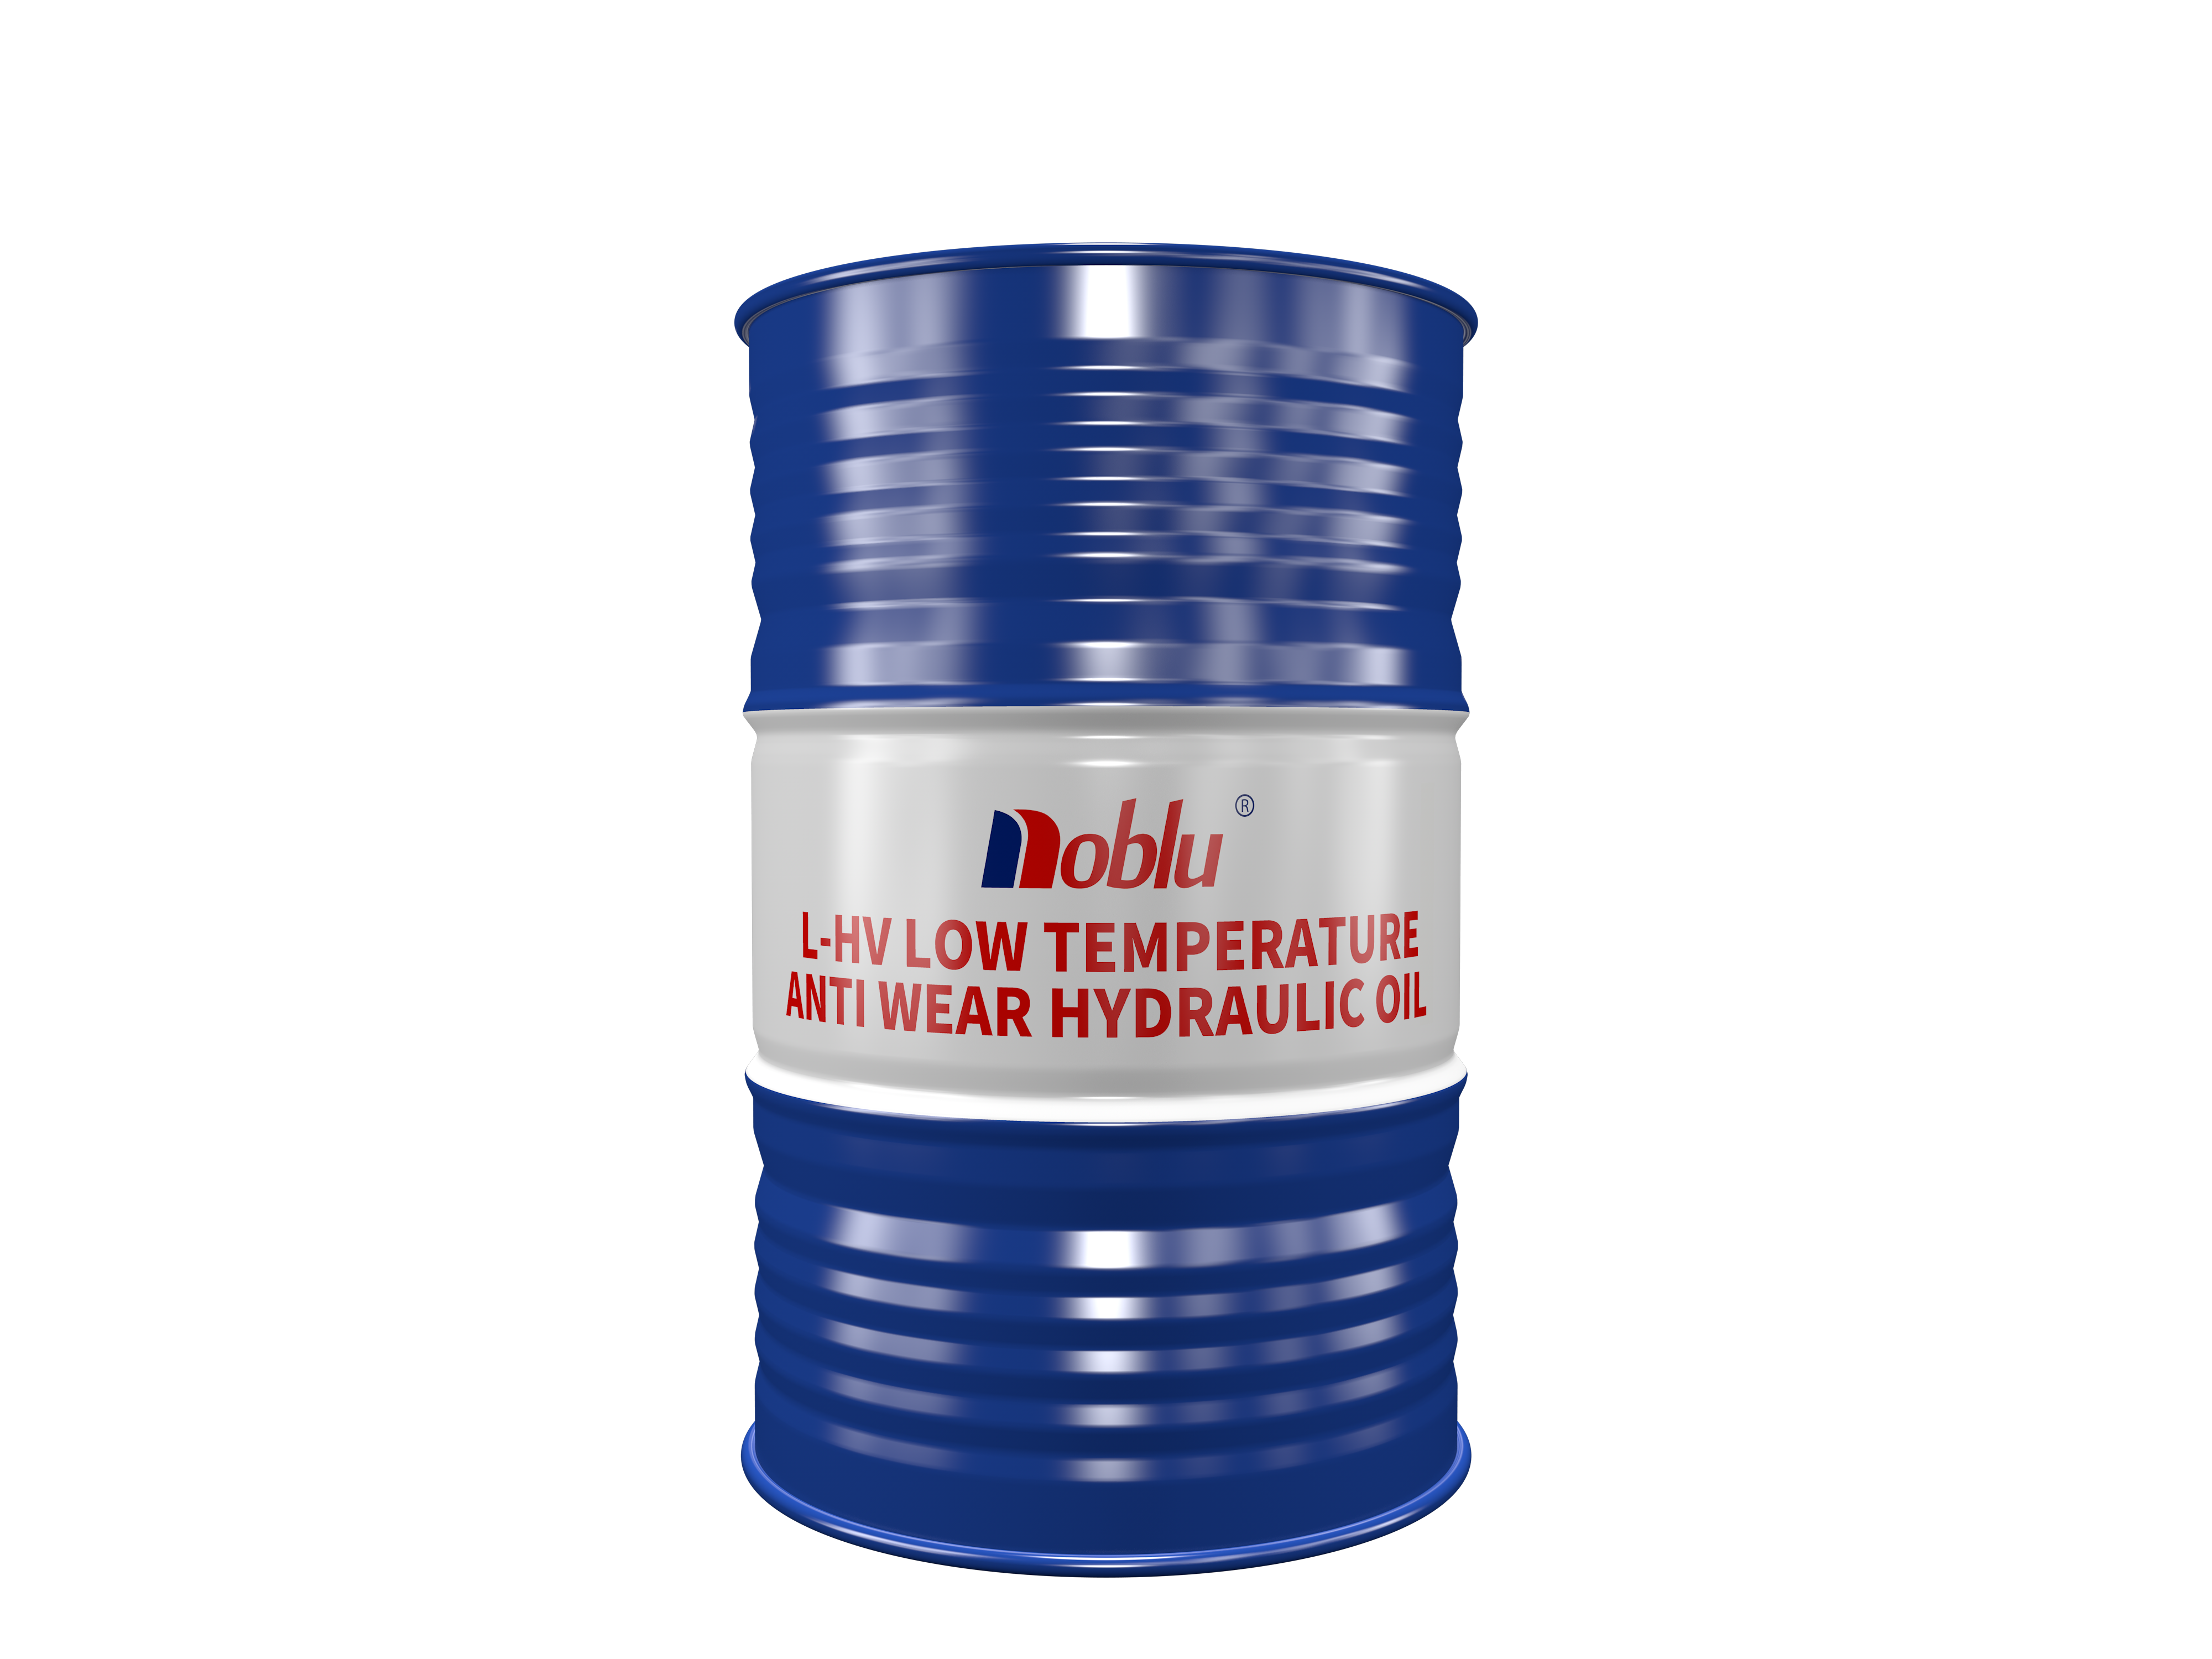 05 L-HV low temperature anti wear hydraulic oil